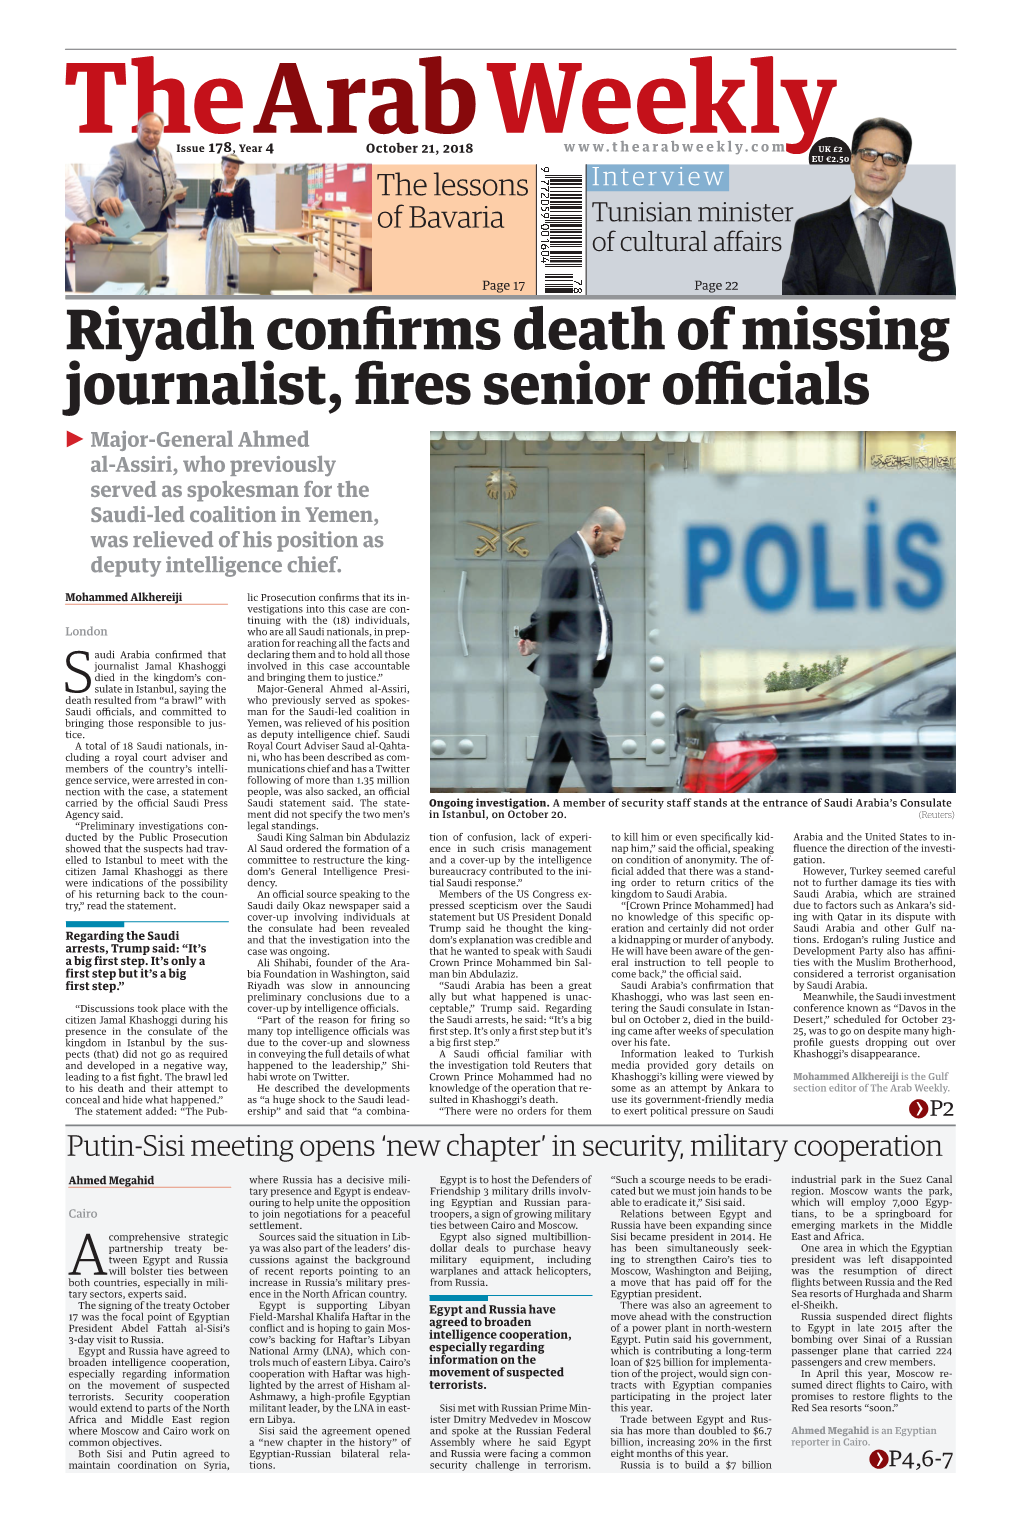 Riyadh Confirms Death of Missing Journalist, Fires Senior Officials